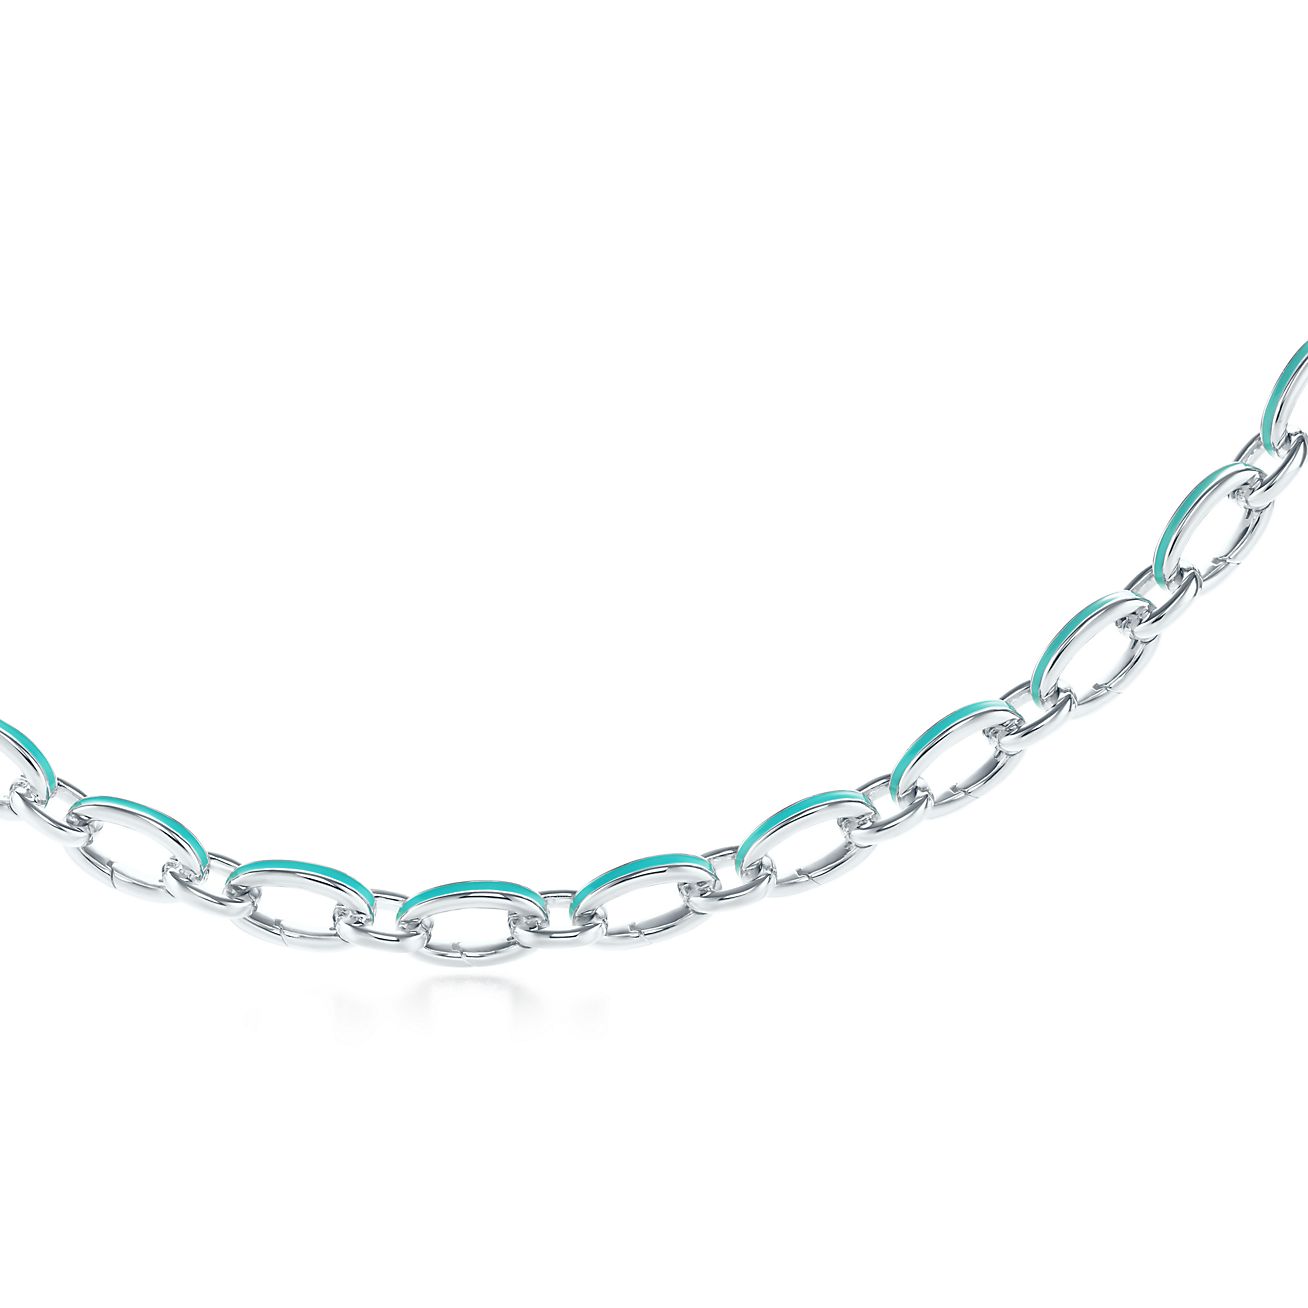 Tiffany Blue® Clasping Link Bracelet